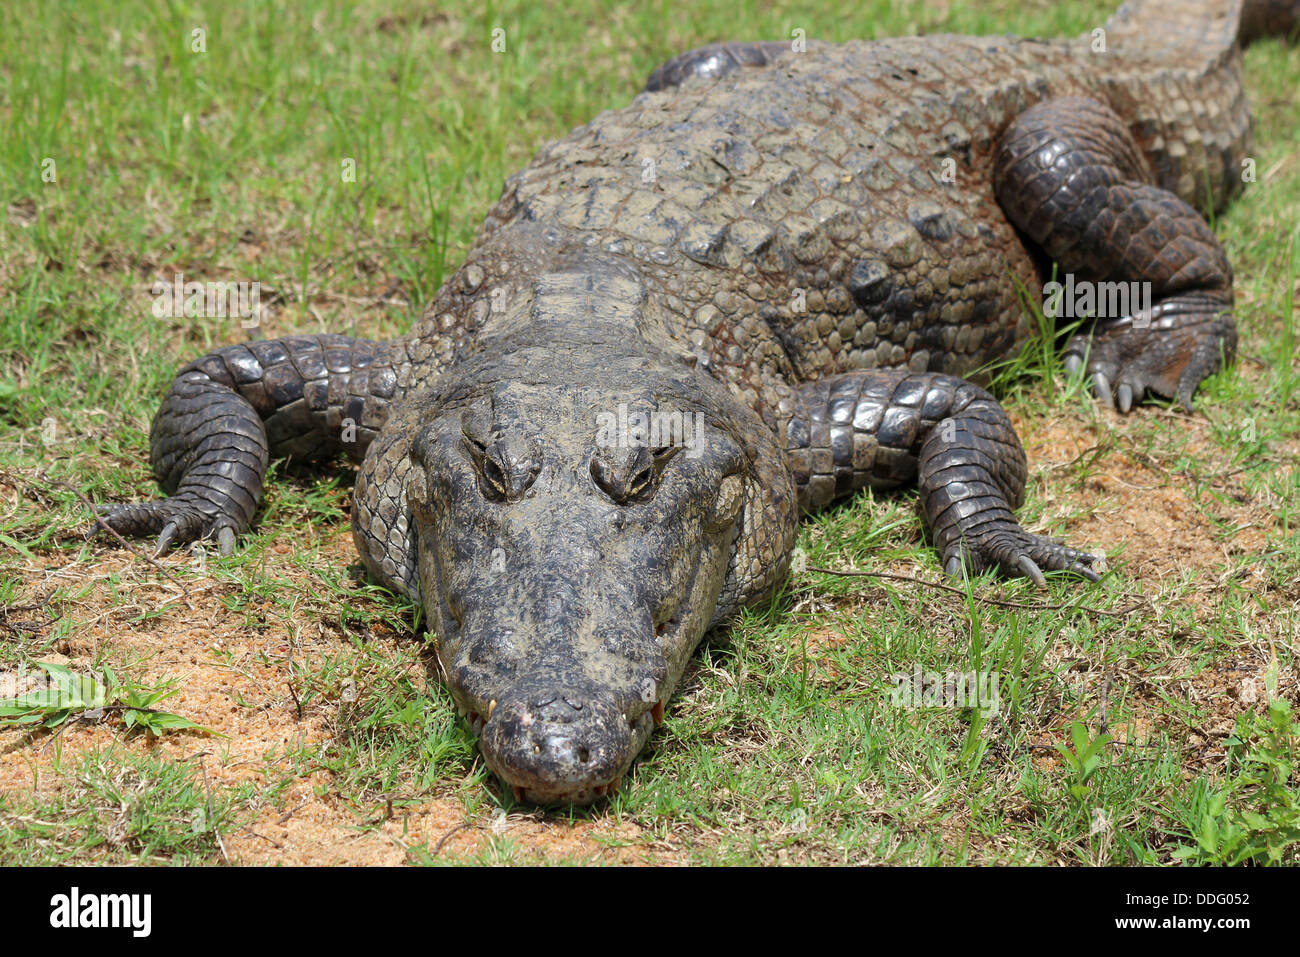 Nile Crocodile Crocodylus niloticus Stock Photo